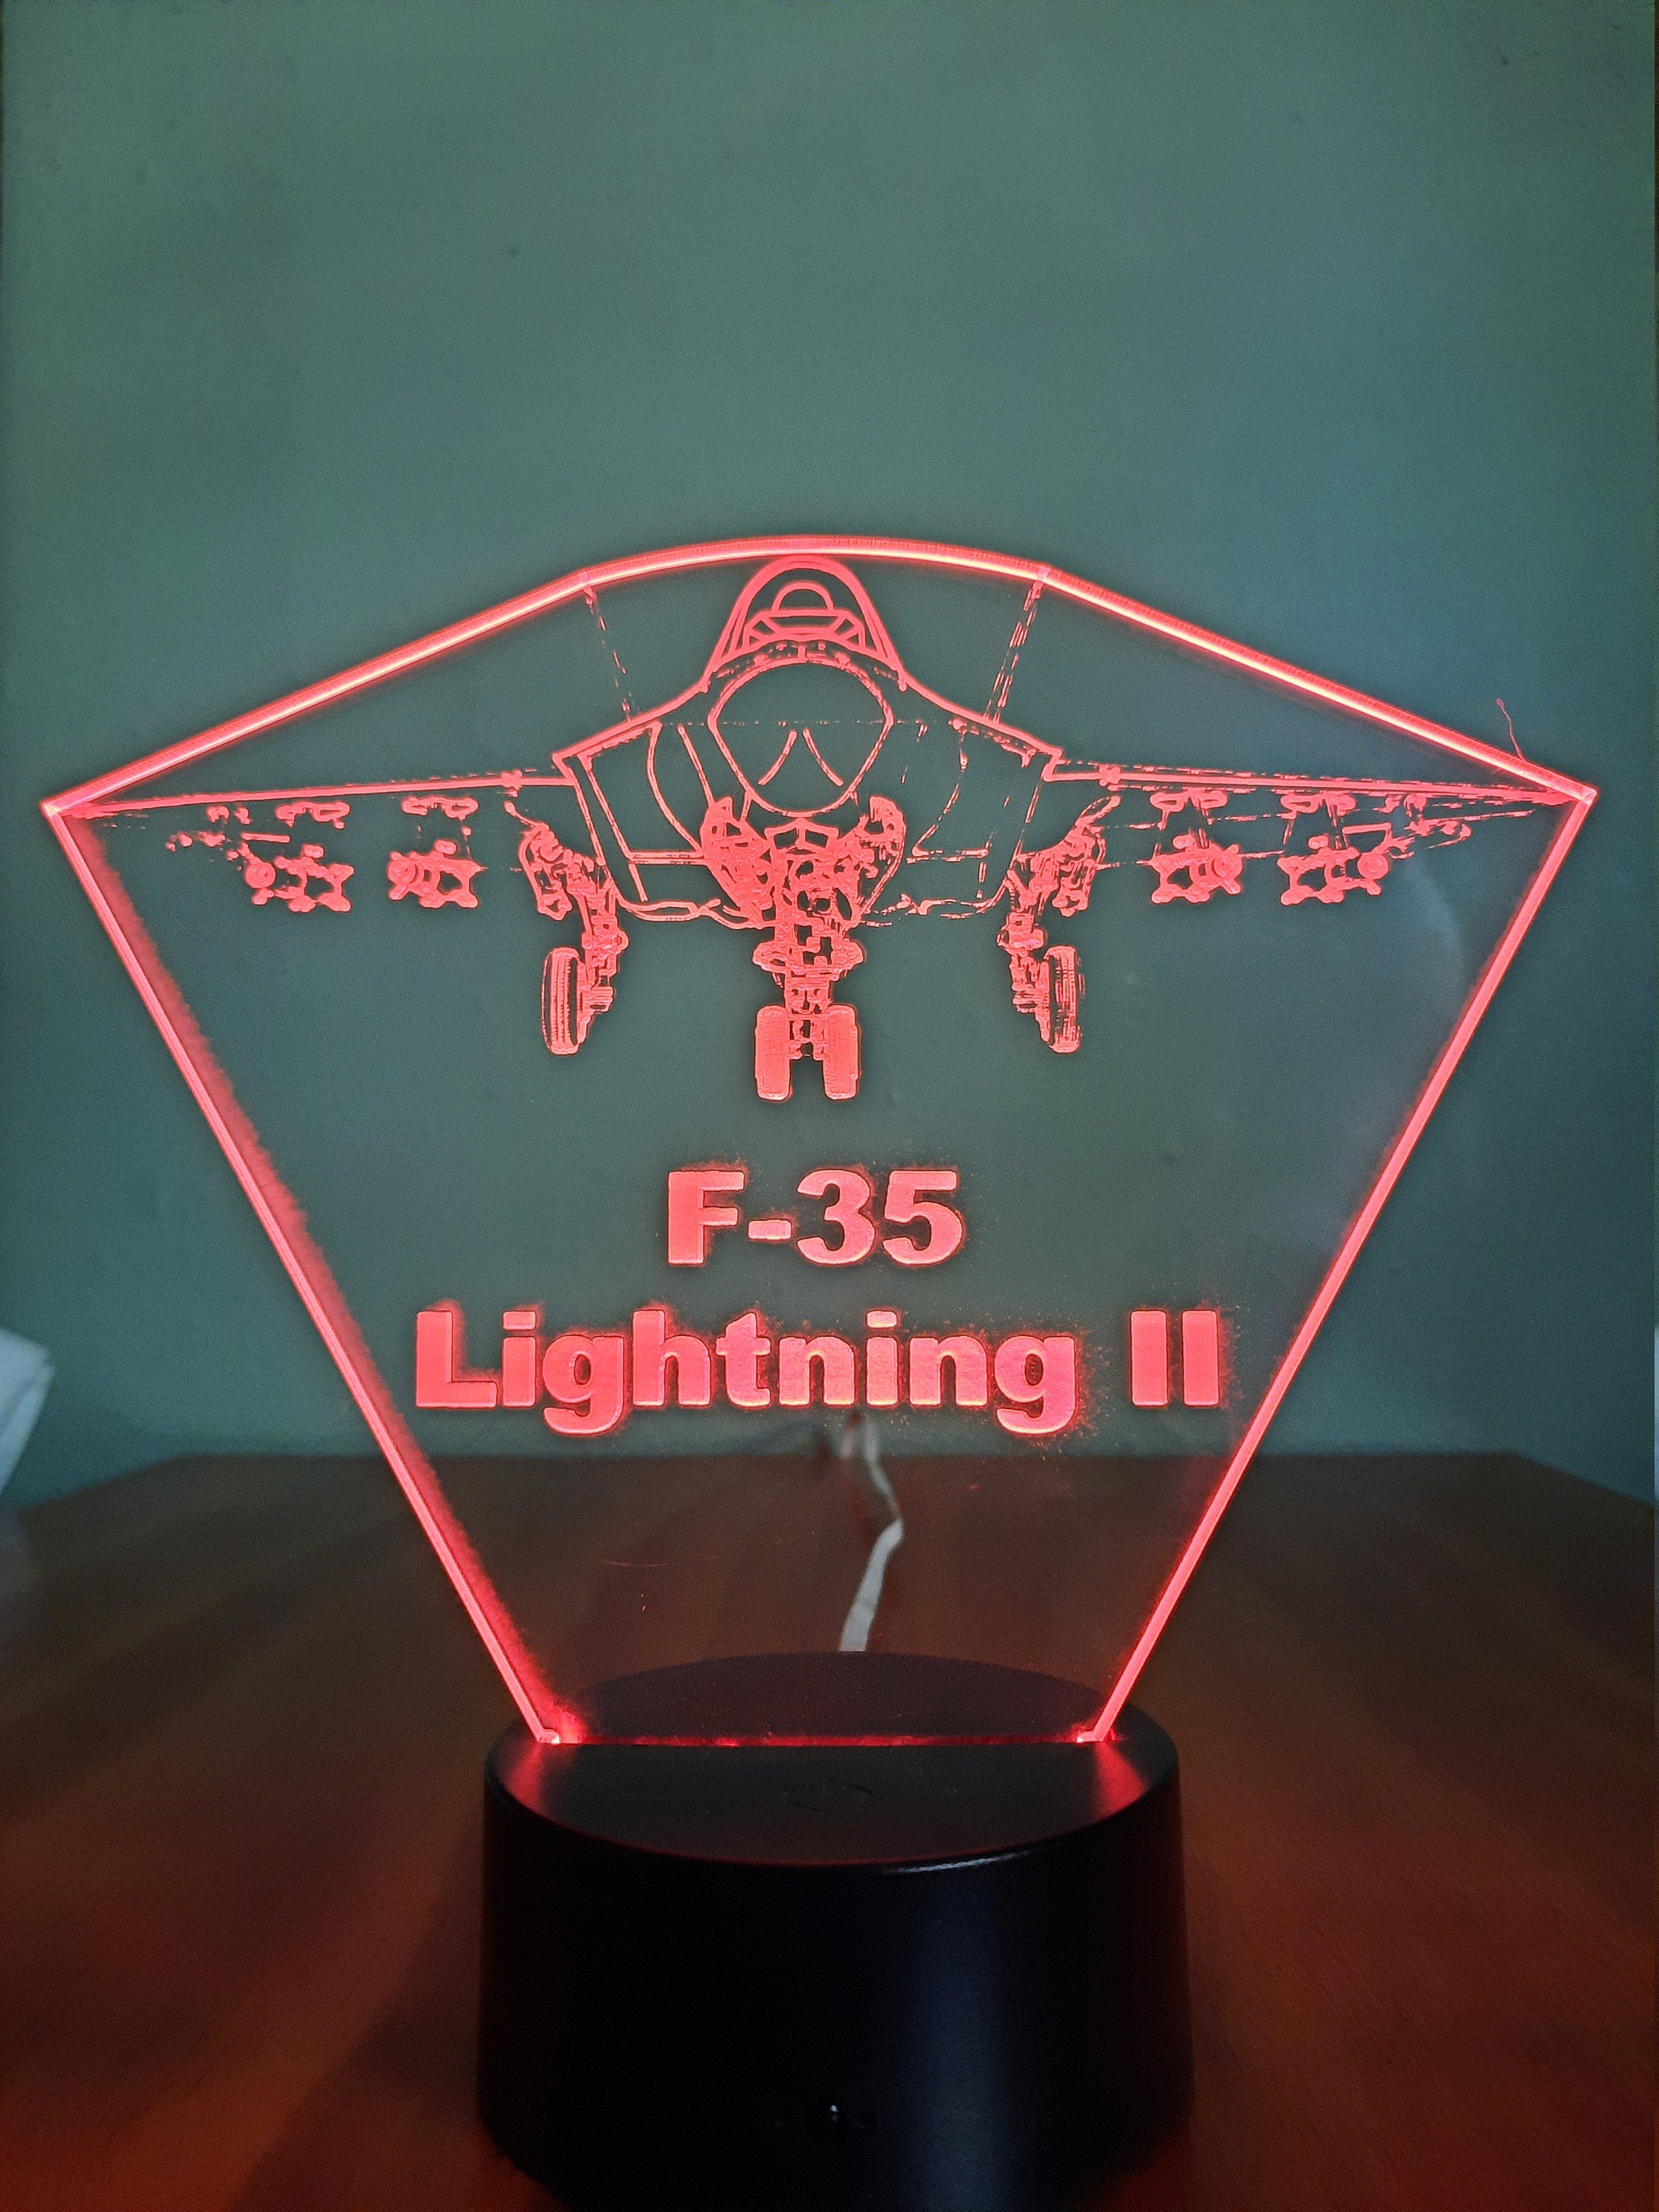 Awesome 3D "F-35 Lightning" LED Lamp (1195) - FREE SHIPPING!